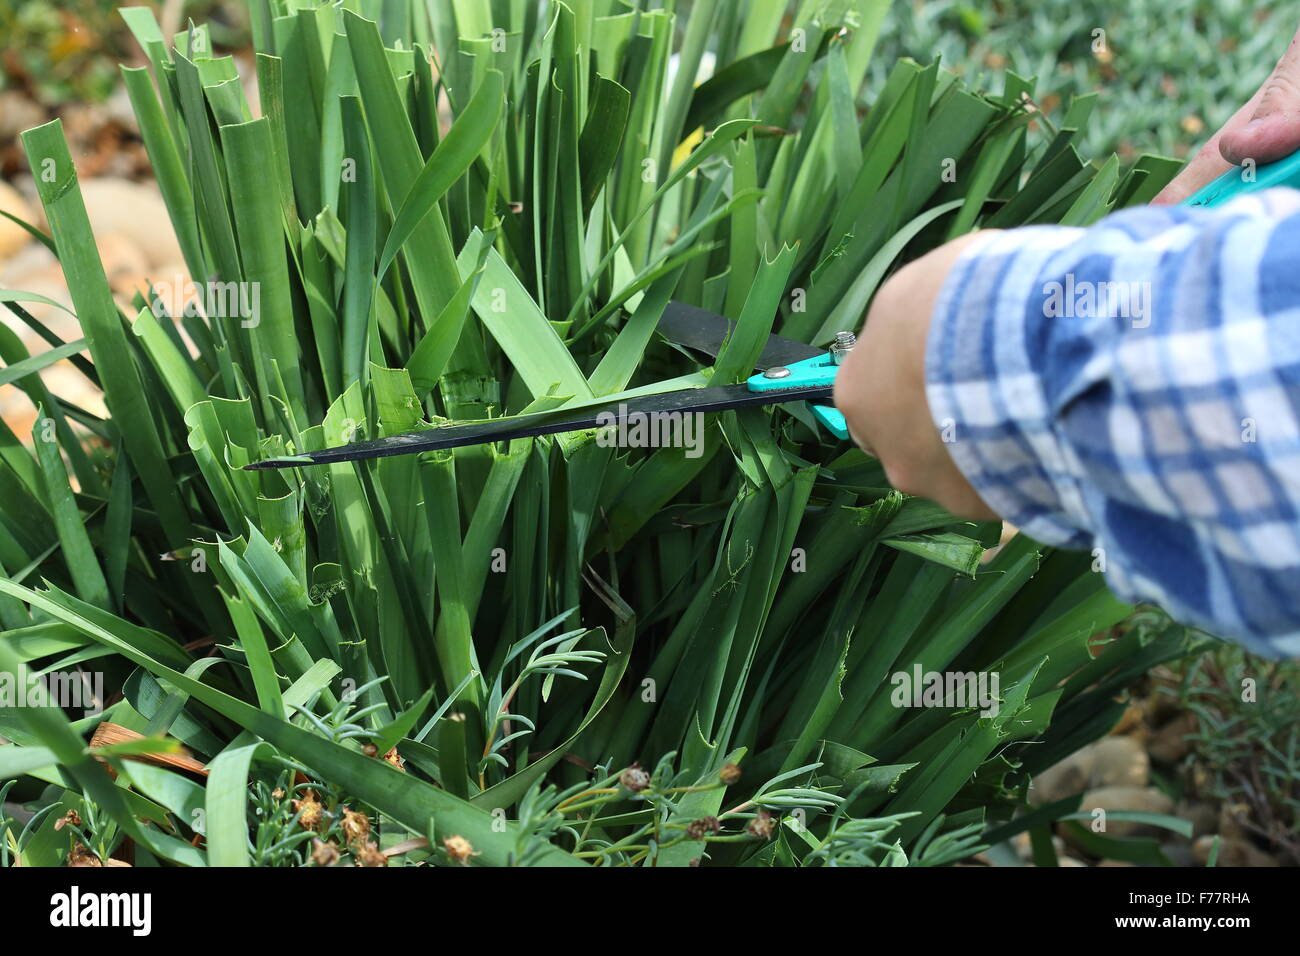 Adult male cutting Lomandra Grass using scissors Stock Photo